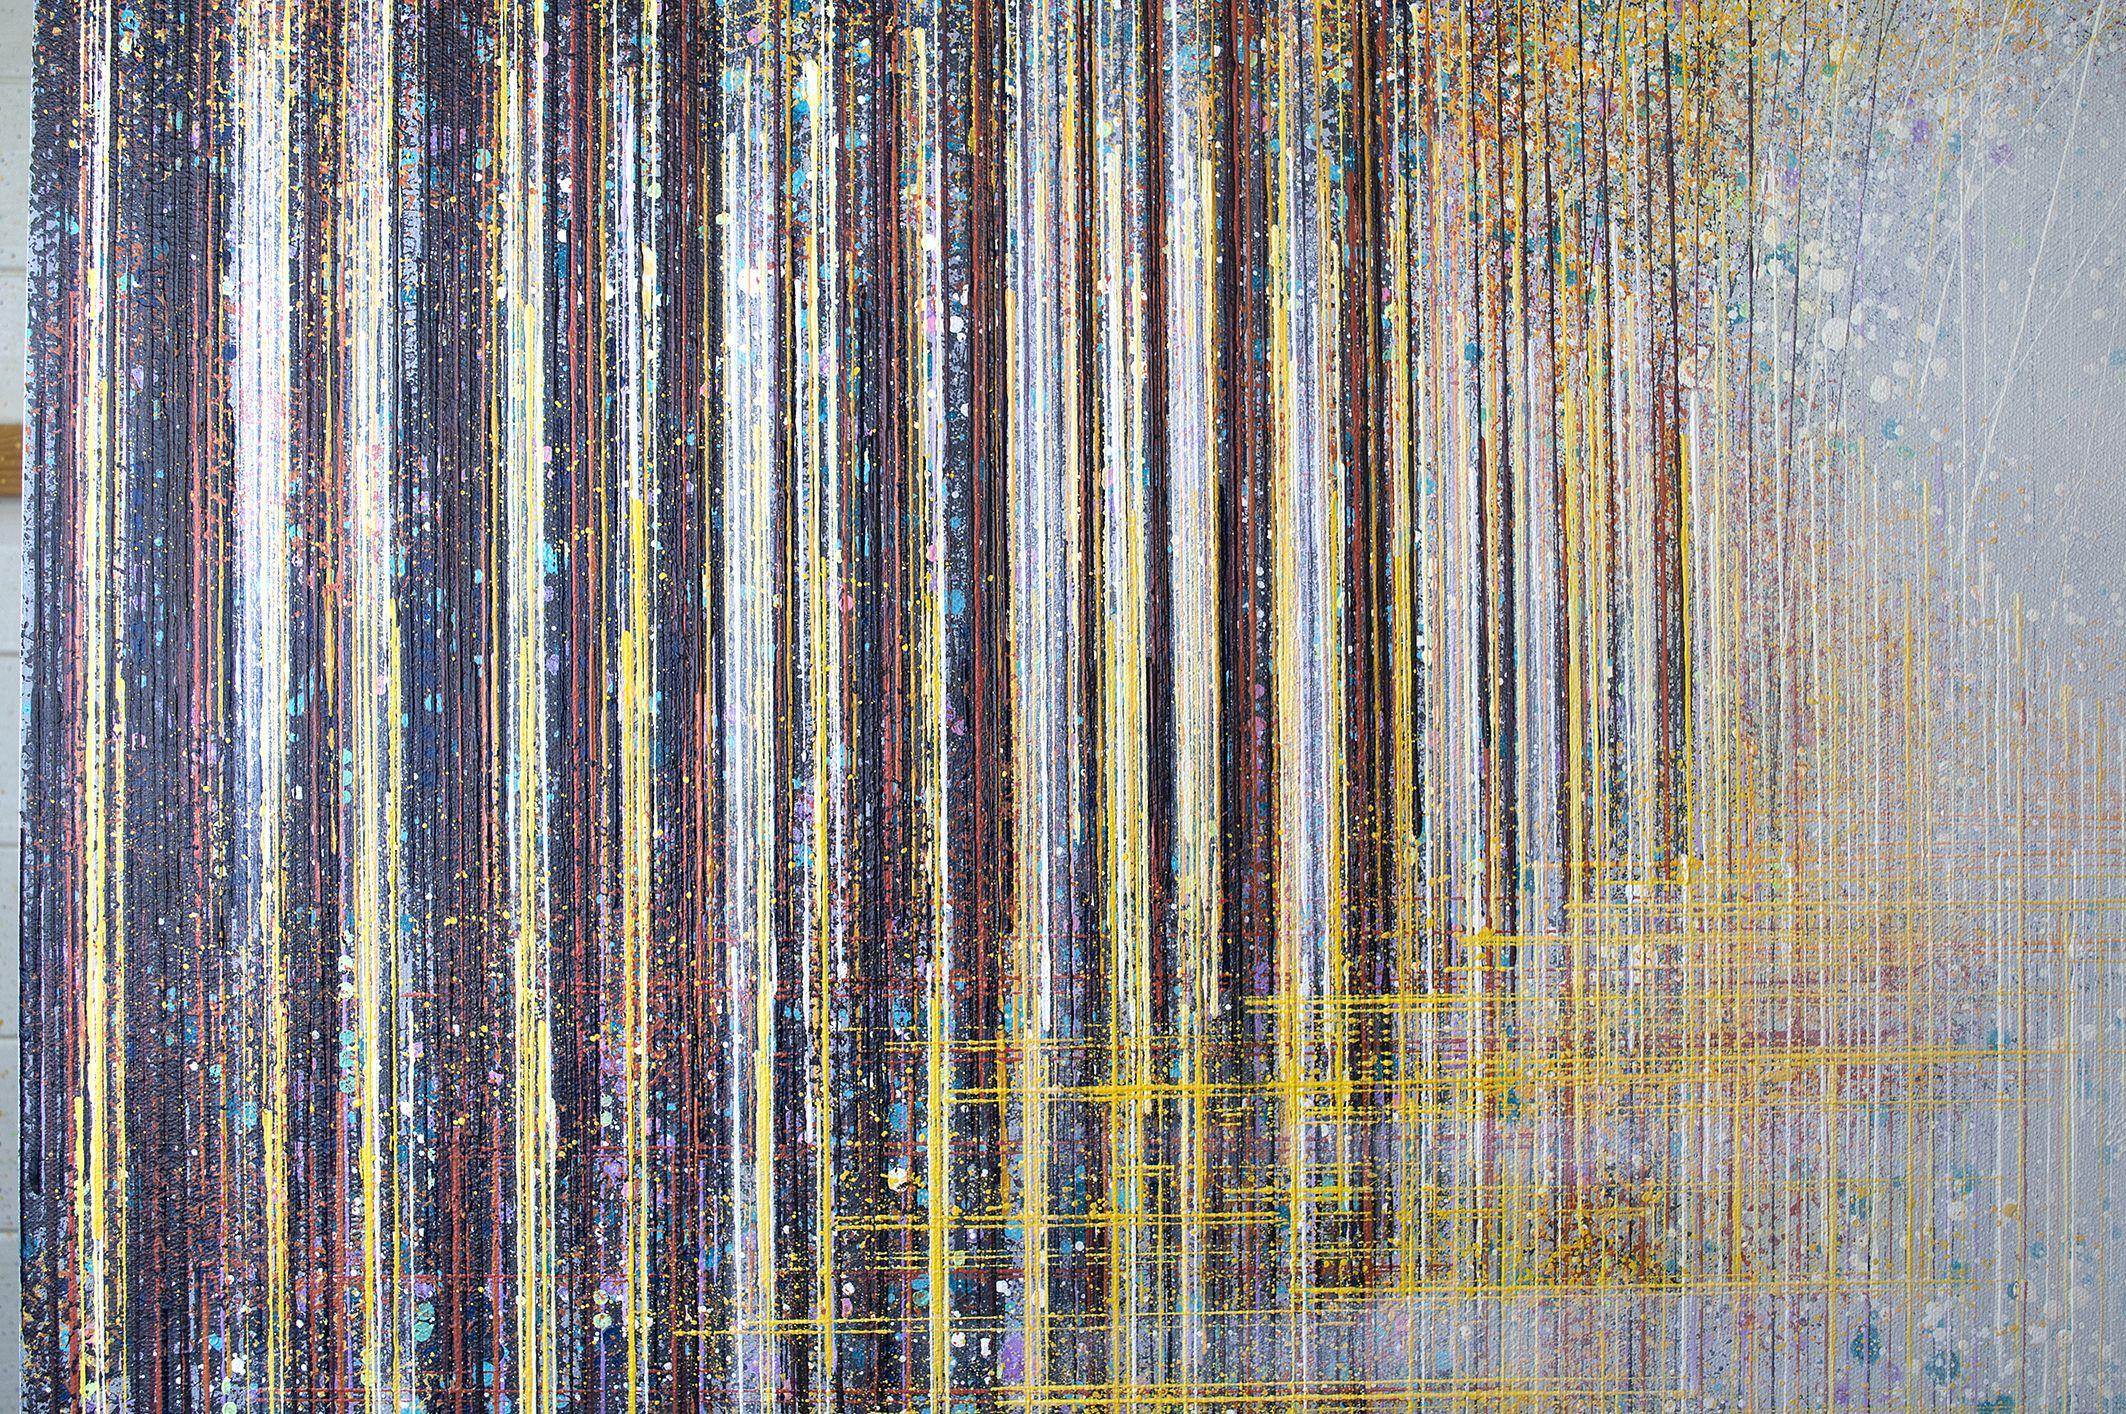 Lakeside Trees At Twilight, Painting, Acrylic on Canvas 3